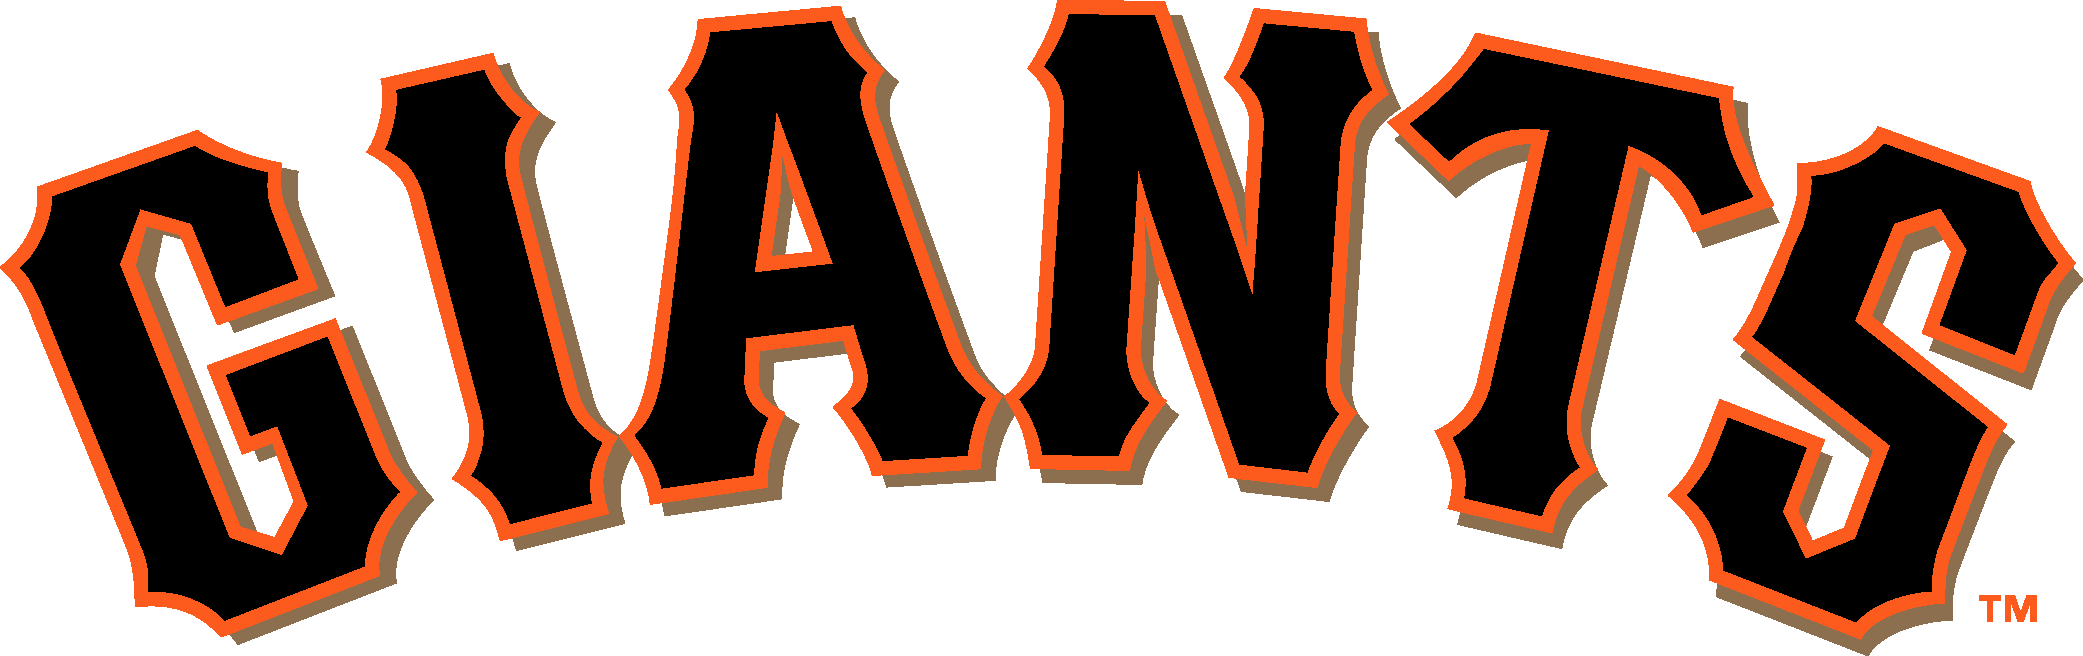 Sf Giants Logo PNG